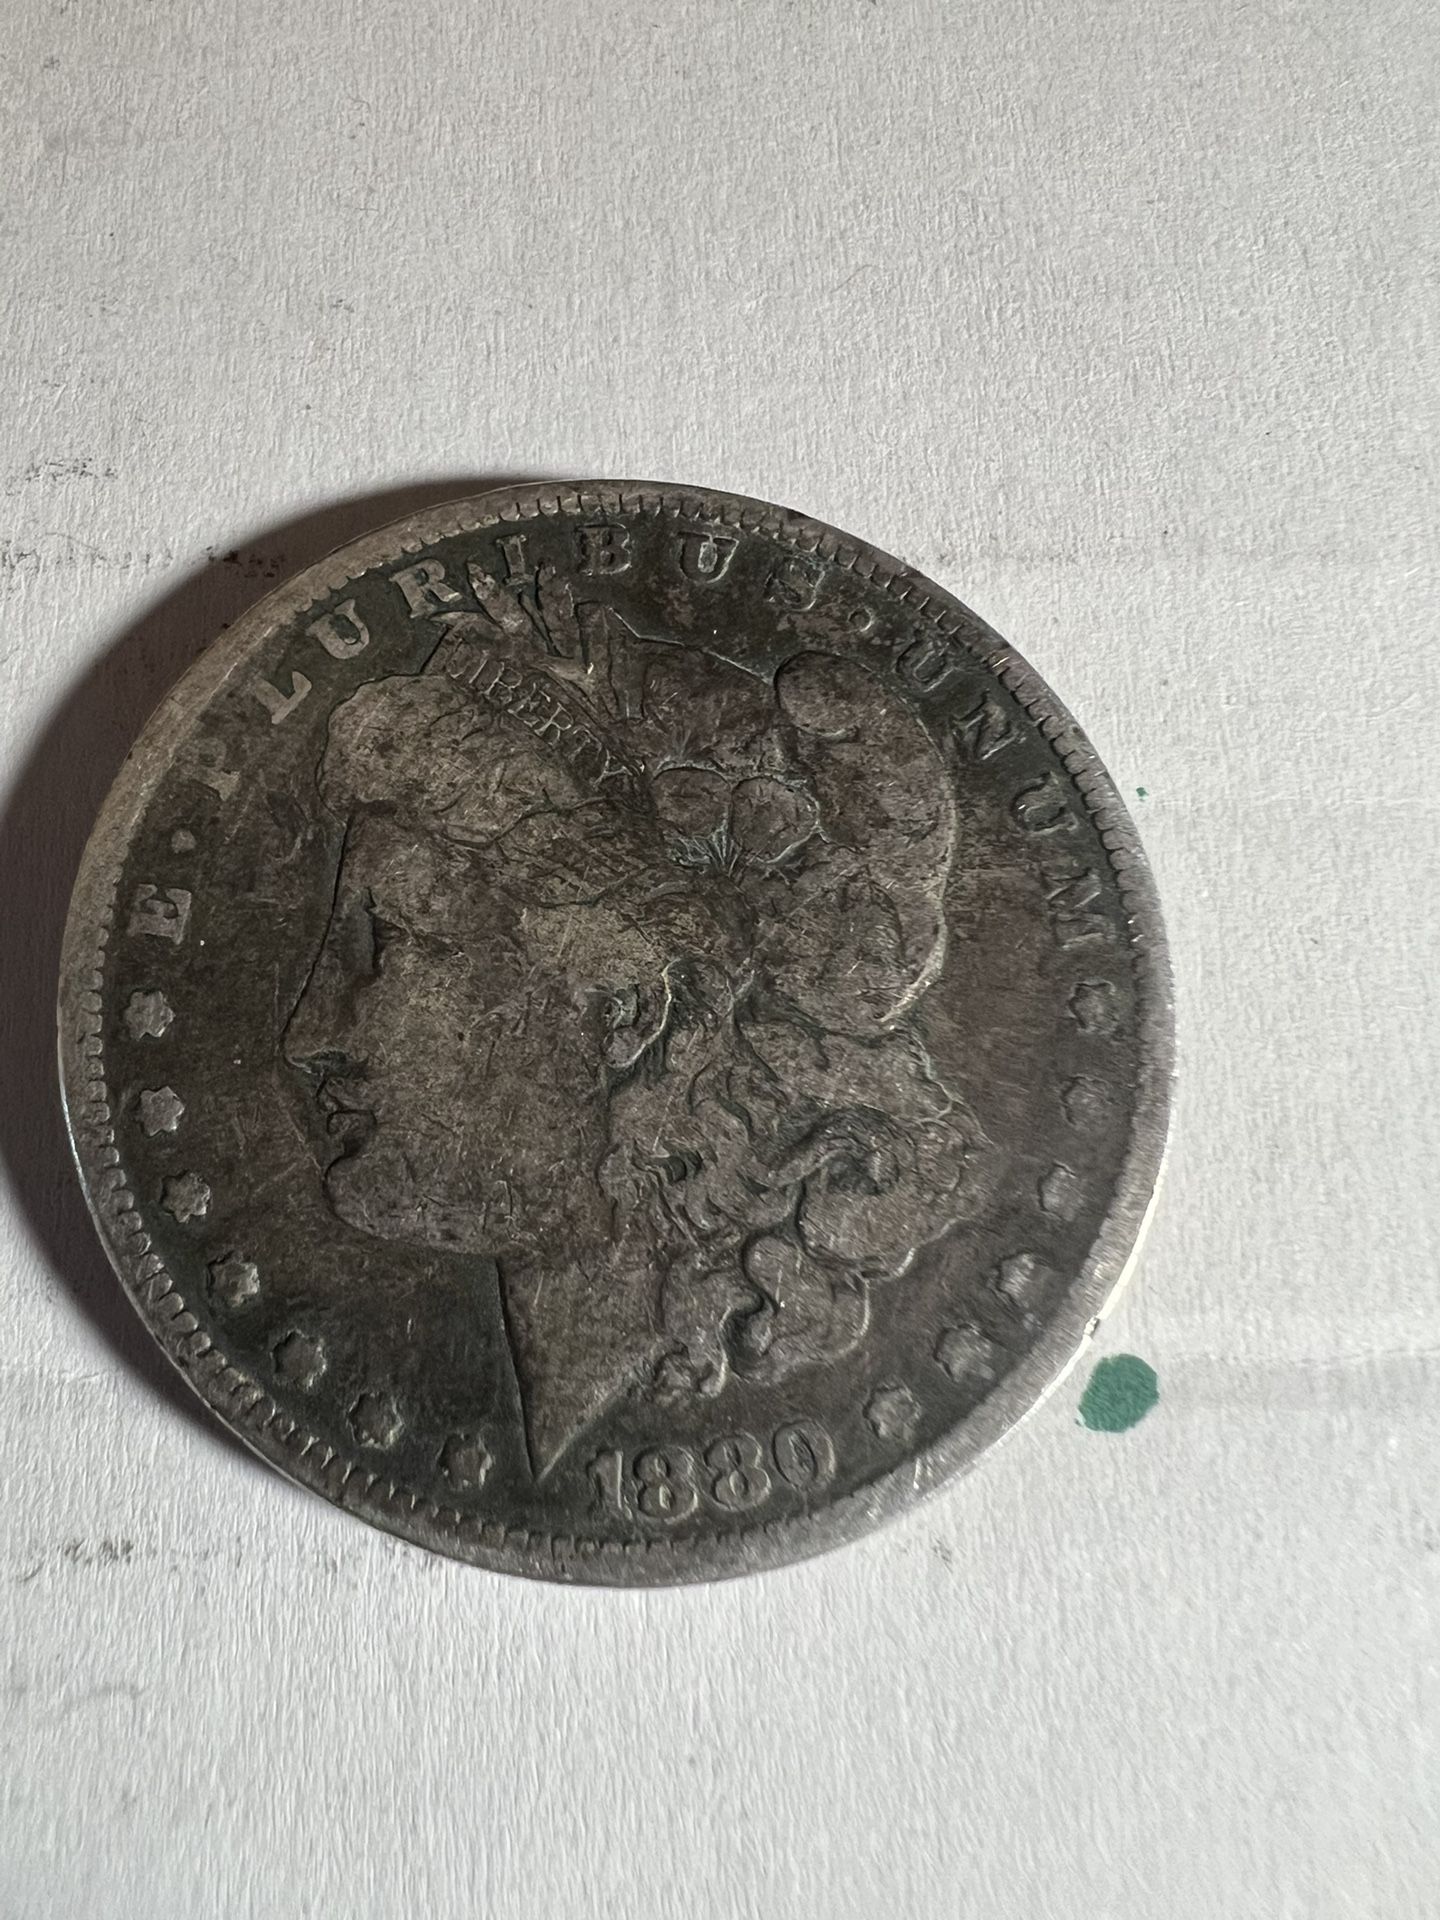 1880 s morgan dollar 